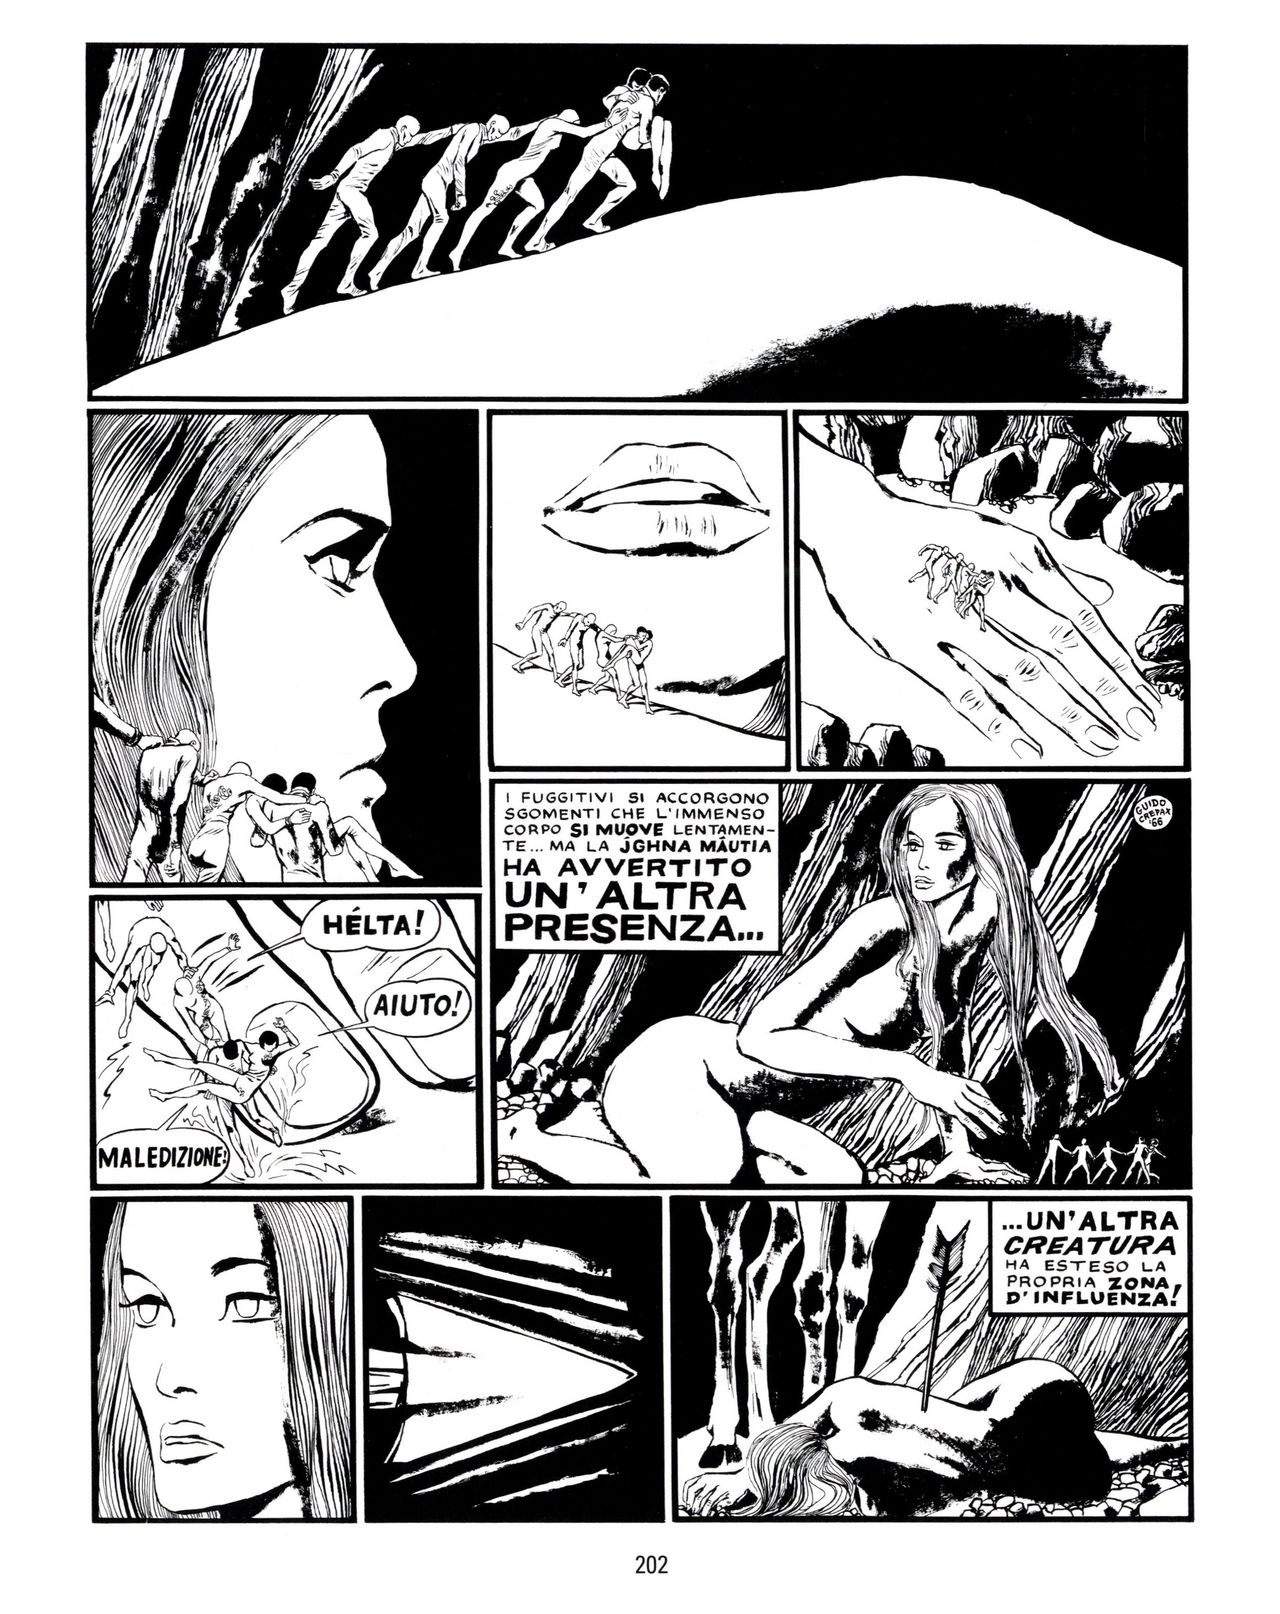 [Guido Crepax] Erotica Fumetti #25 : L'ascesa dei sotterranei : I cavalieri ciechi [Italian] 203